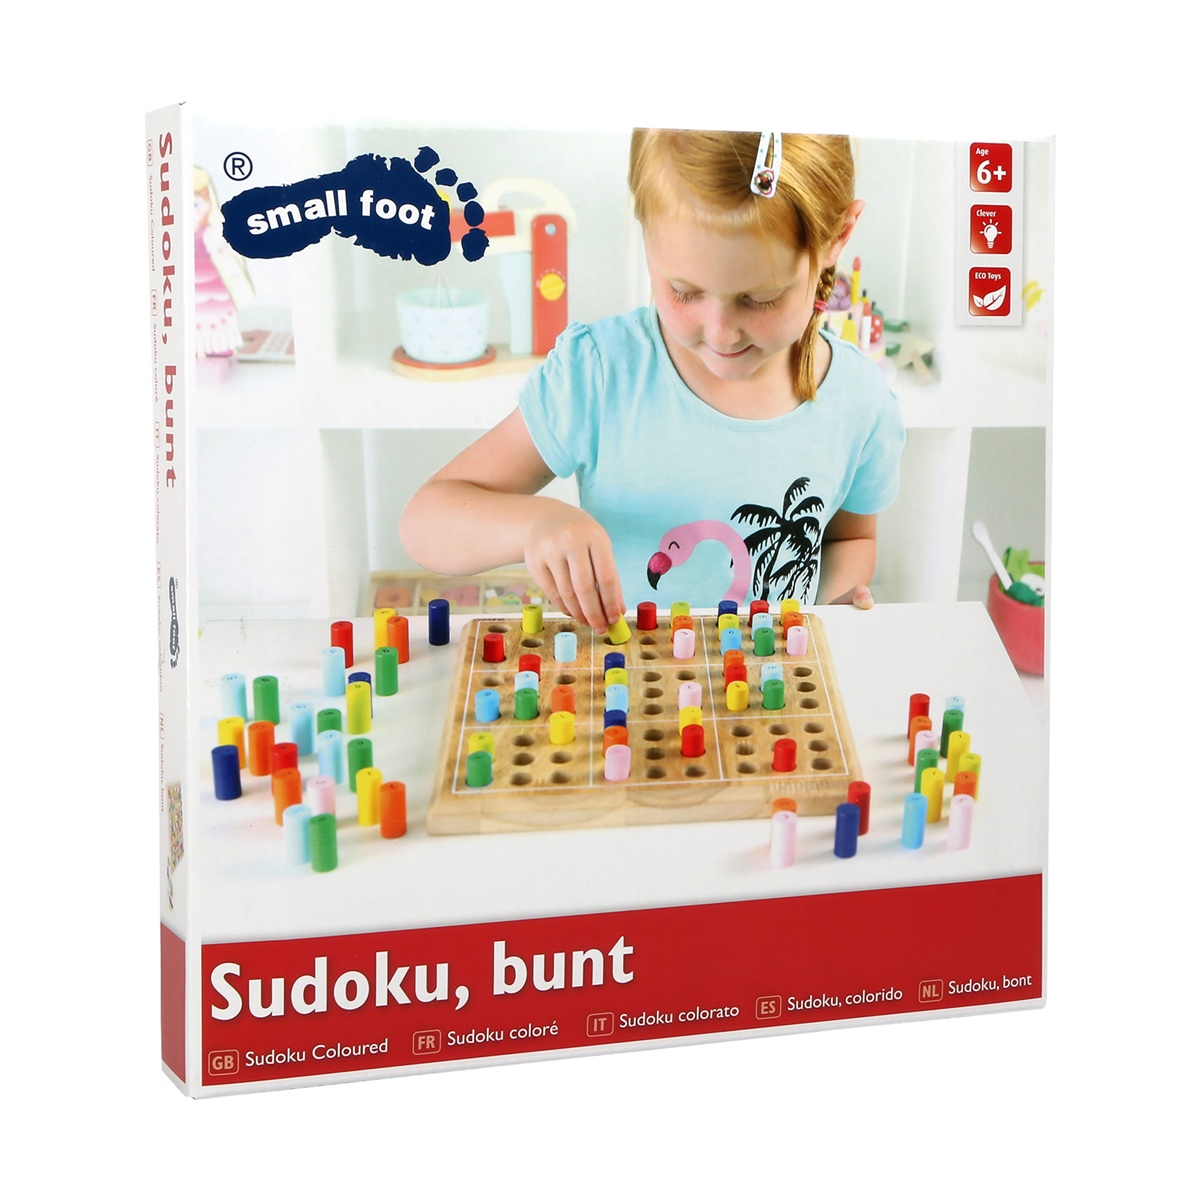 Sudoku rund-bunt, small foot Design - Sudoku rund-bunt, Holzspiel